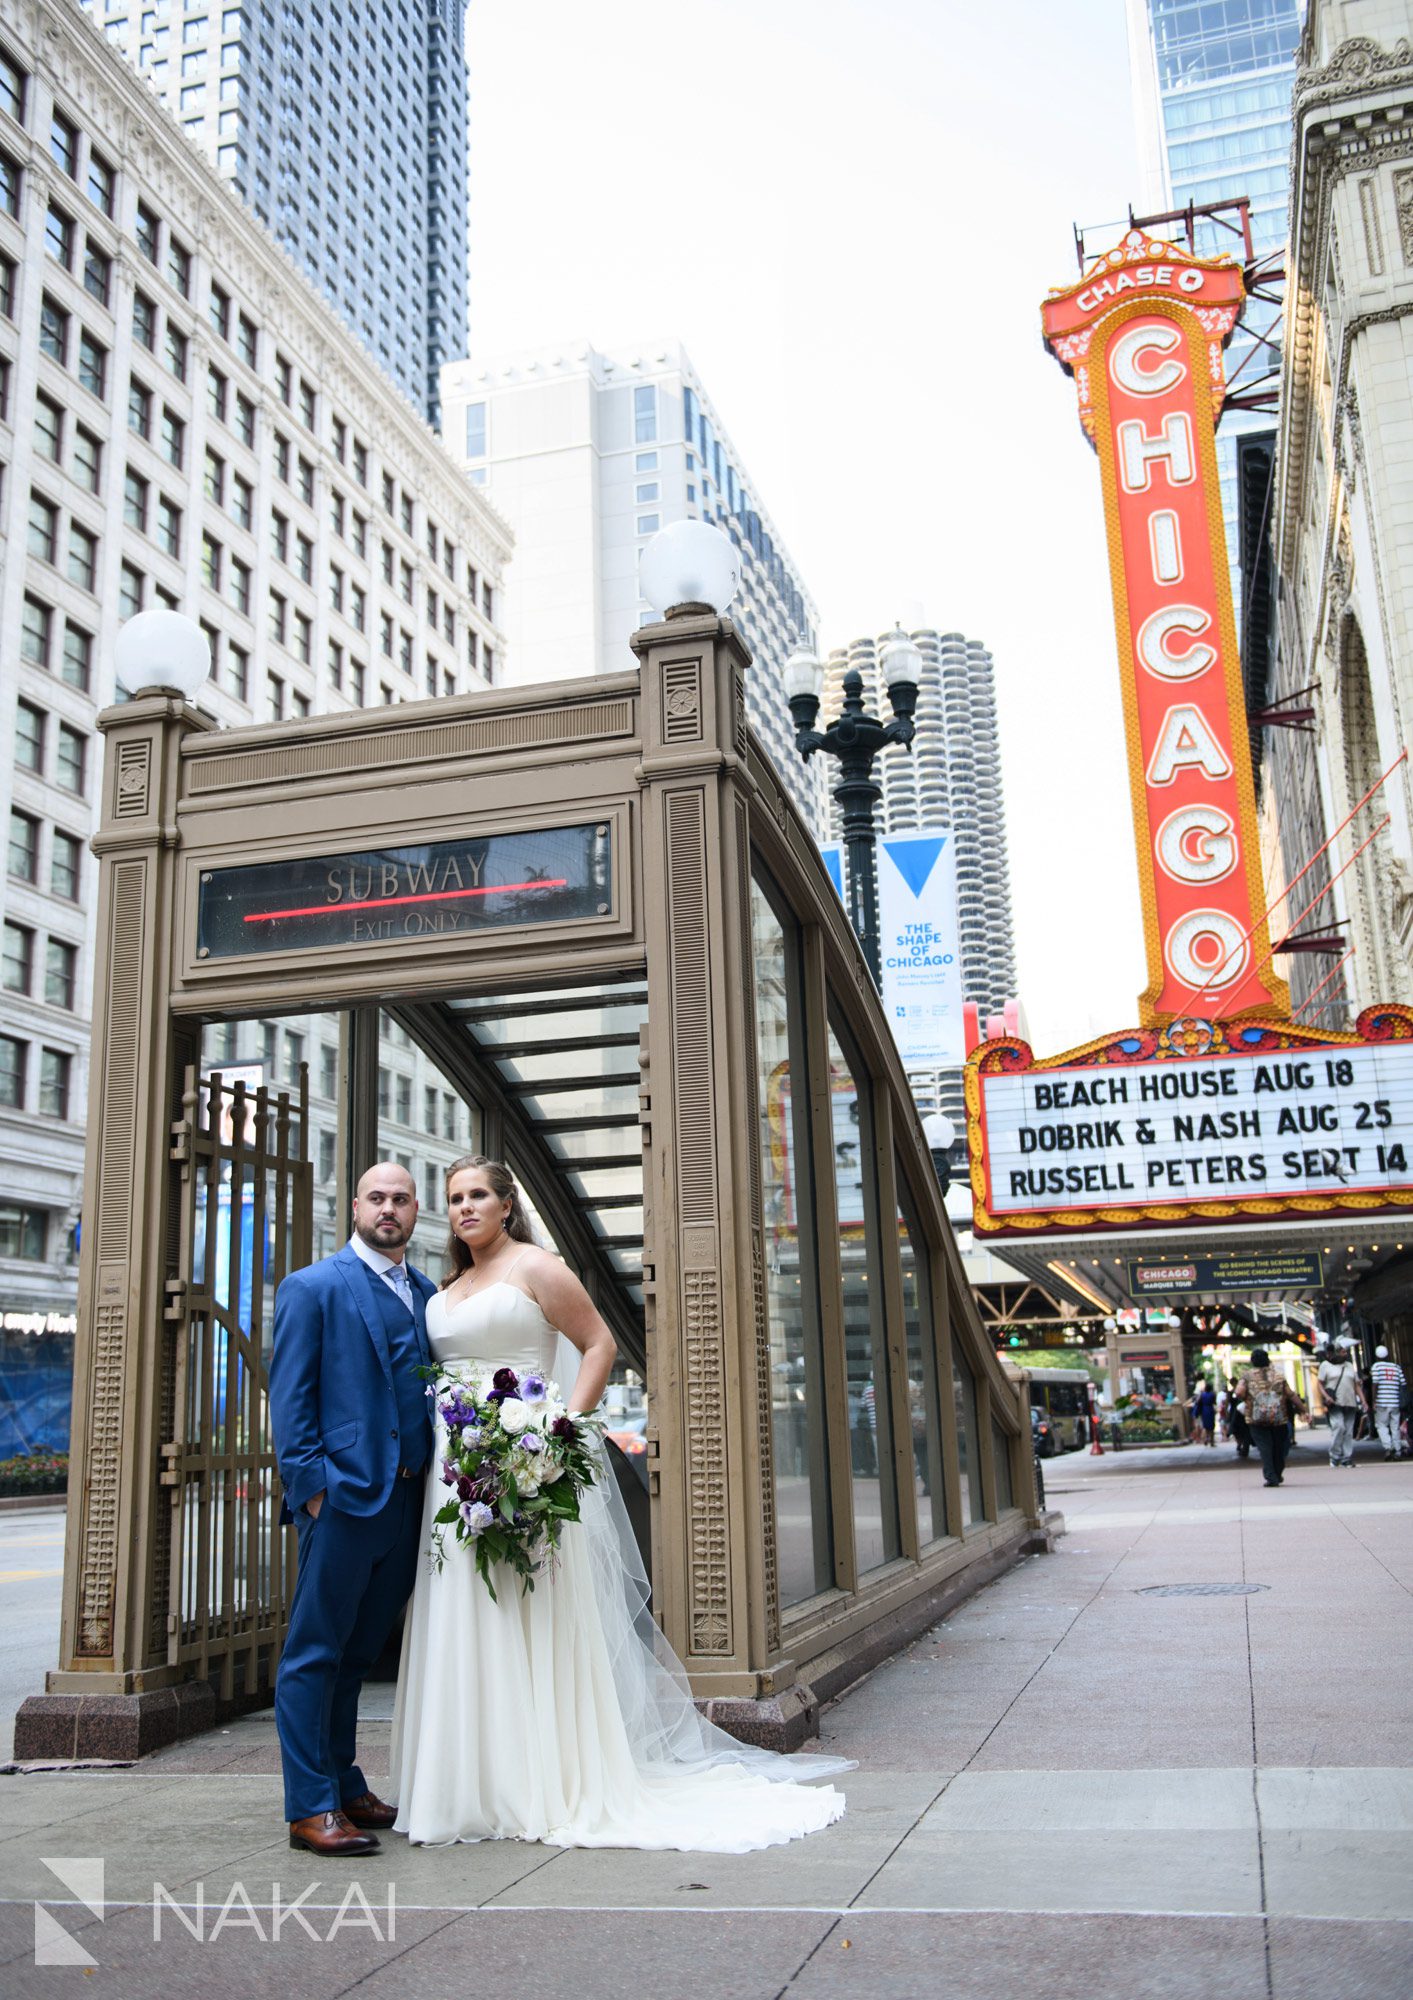 Chicago theatre sign wedding photographer bride groom